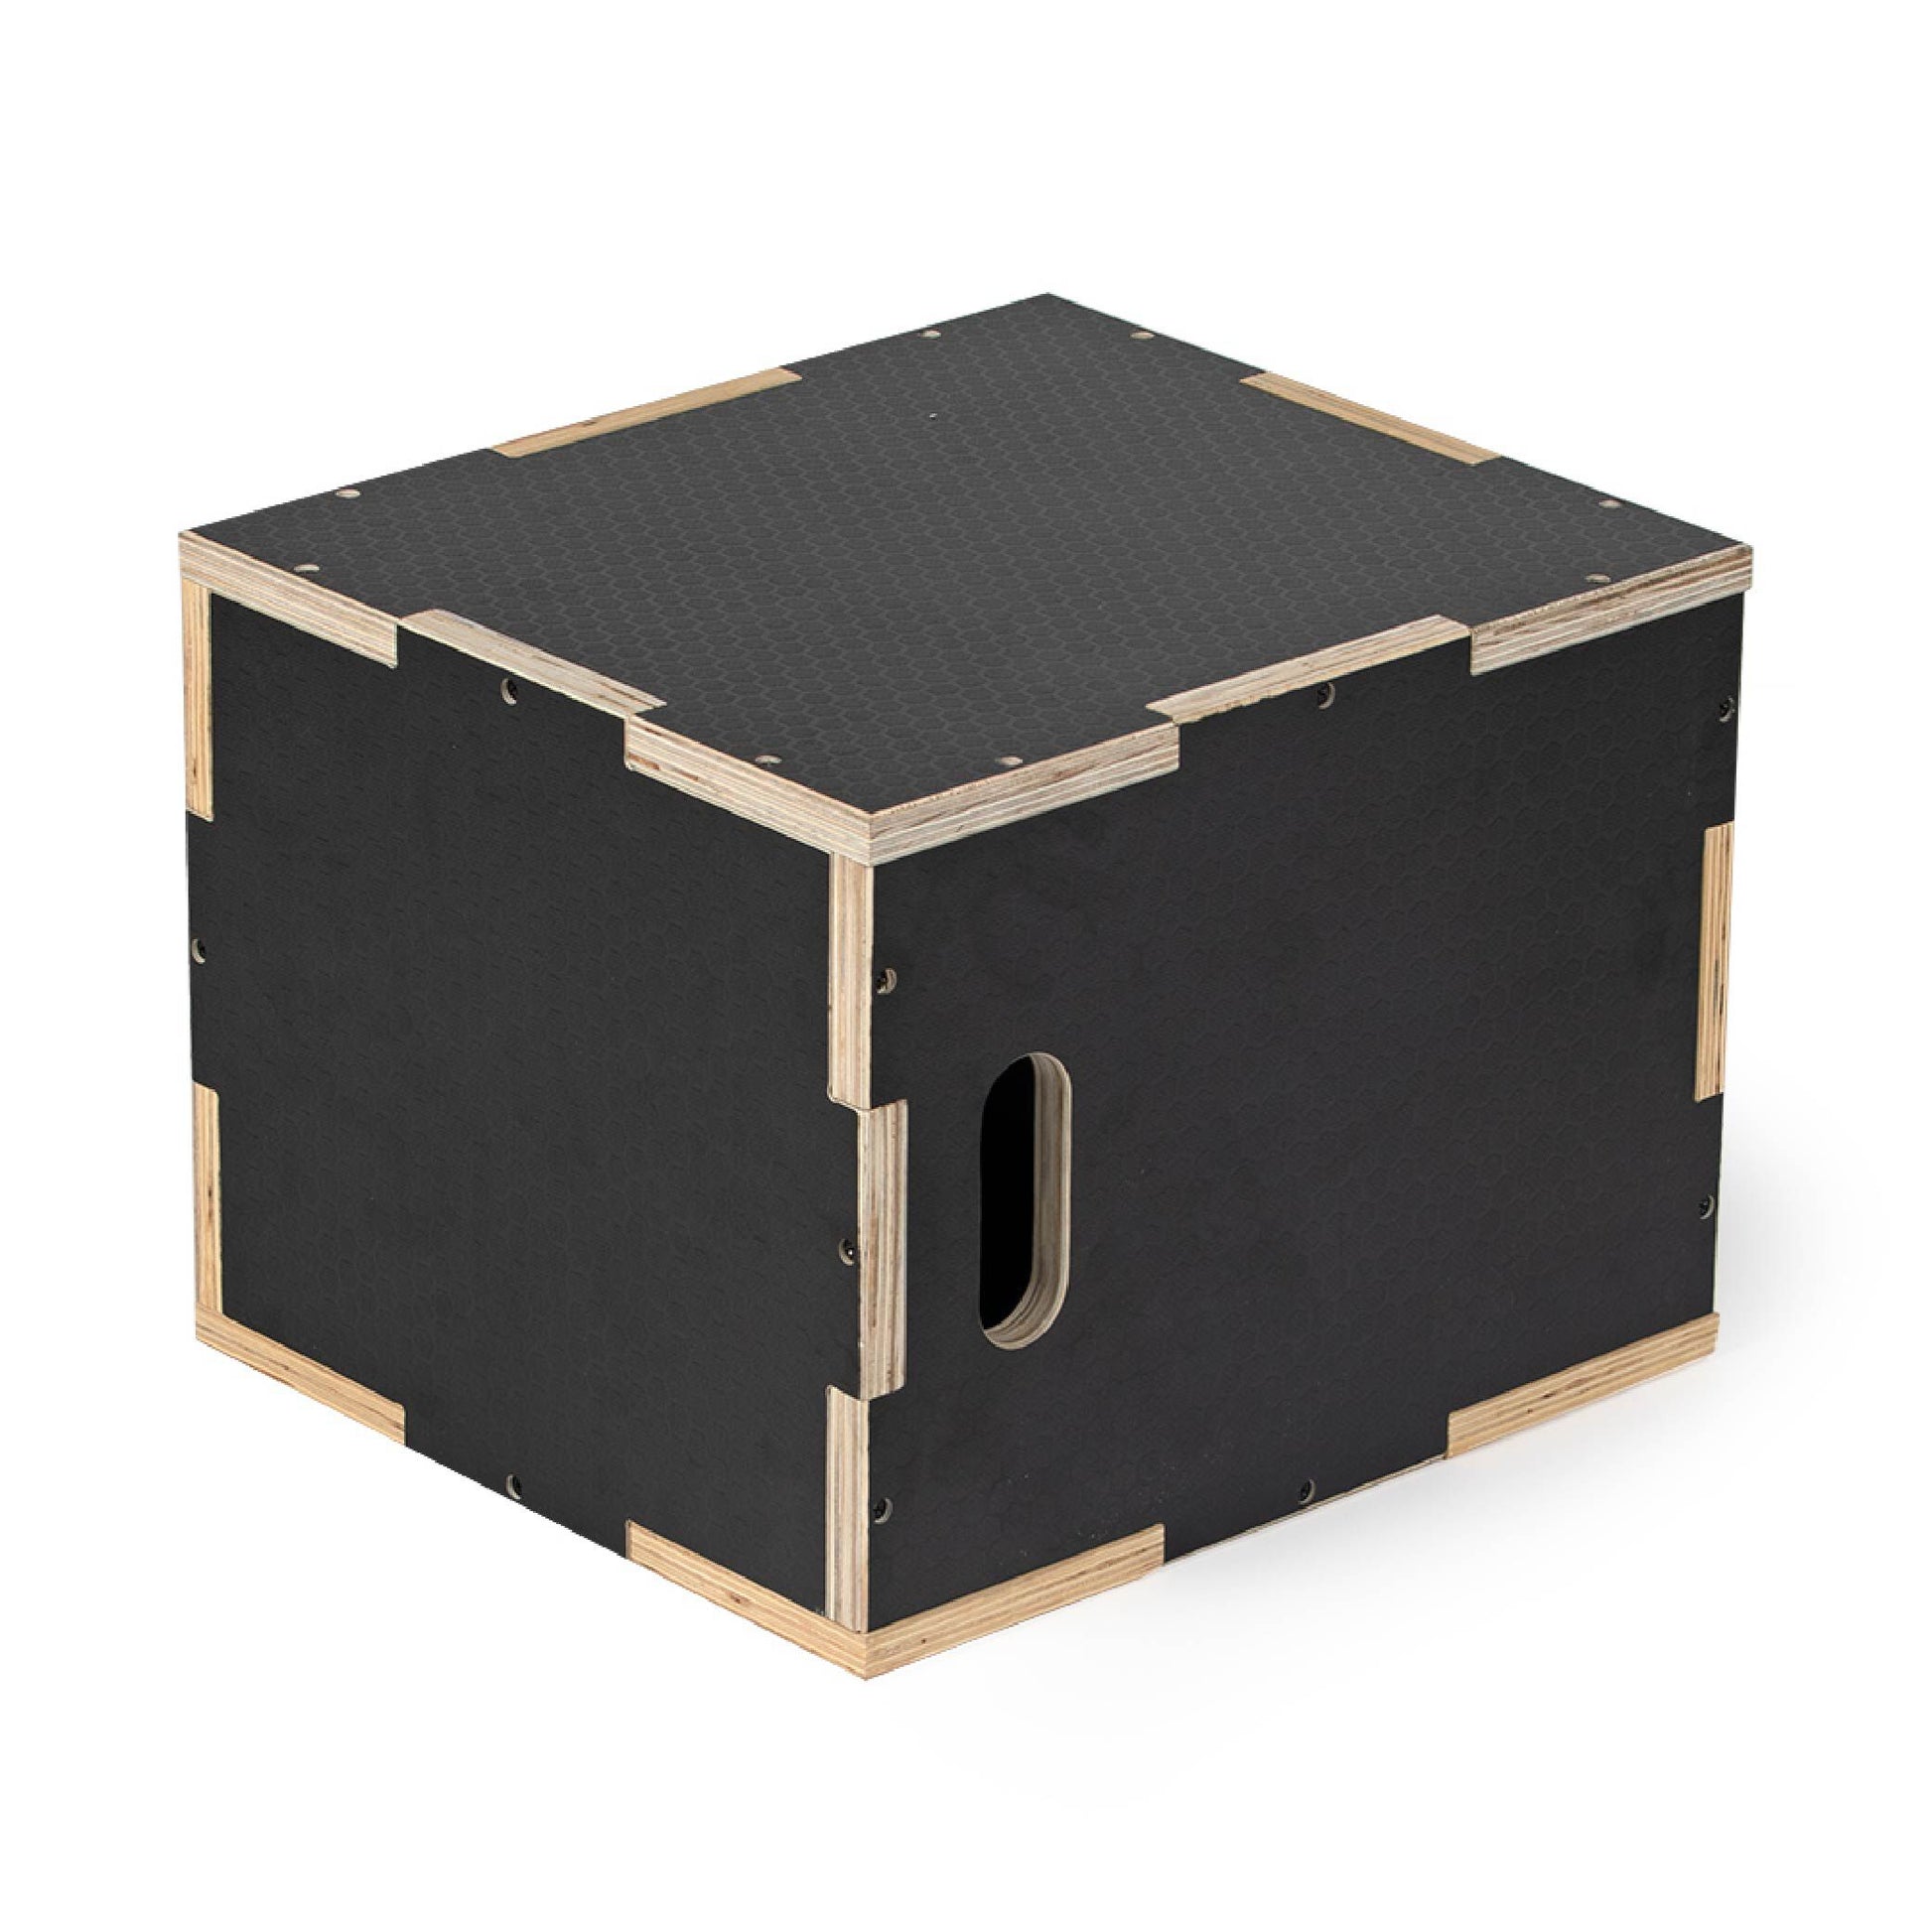 Youth 3-in-1 Wooden Plyometric Box – 12" x 14" x 16"